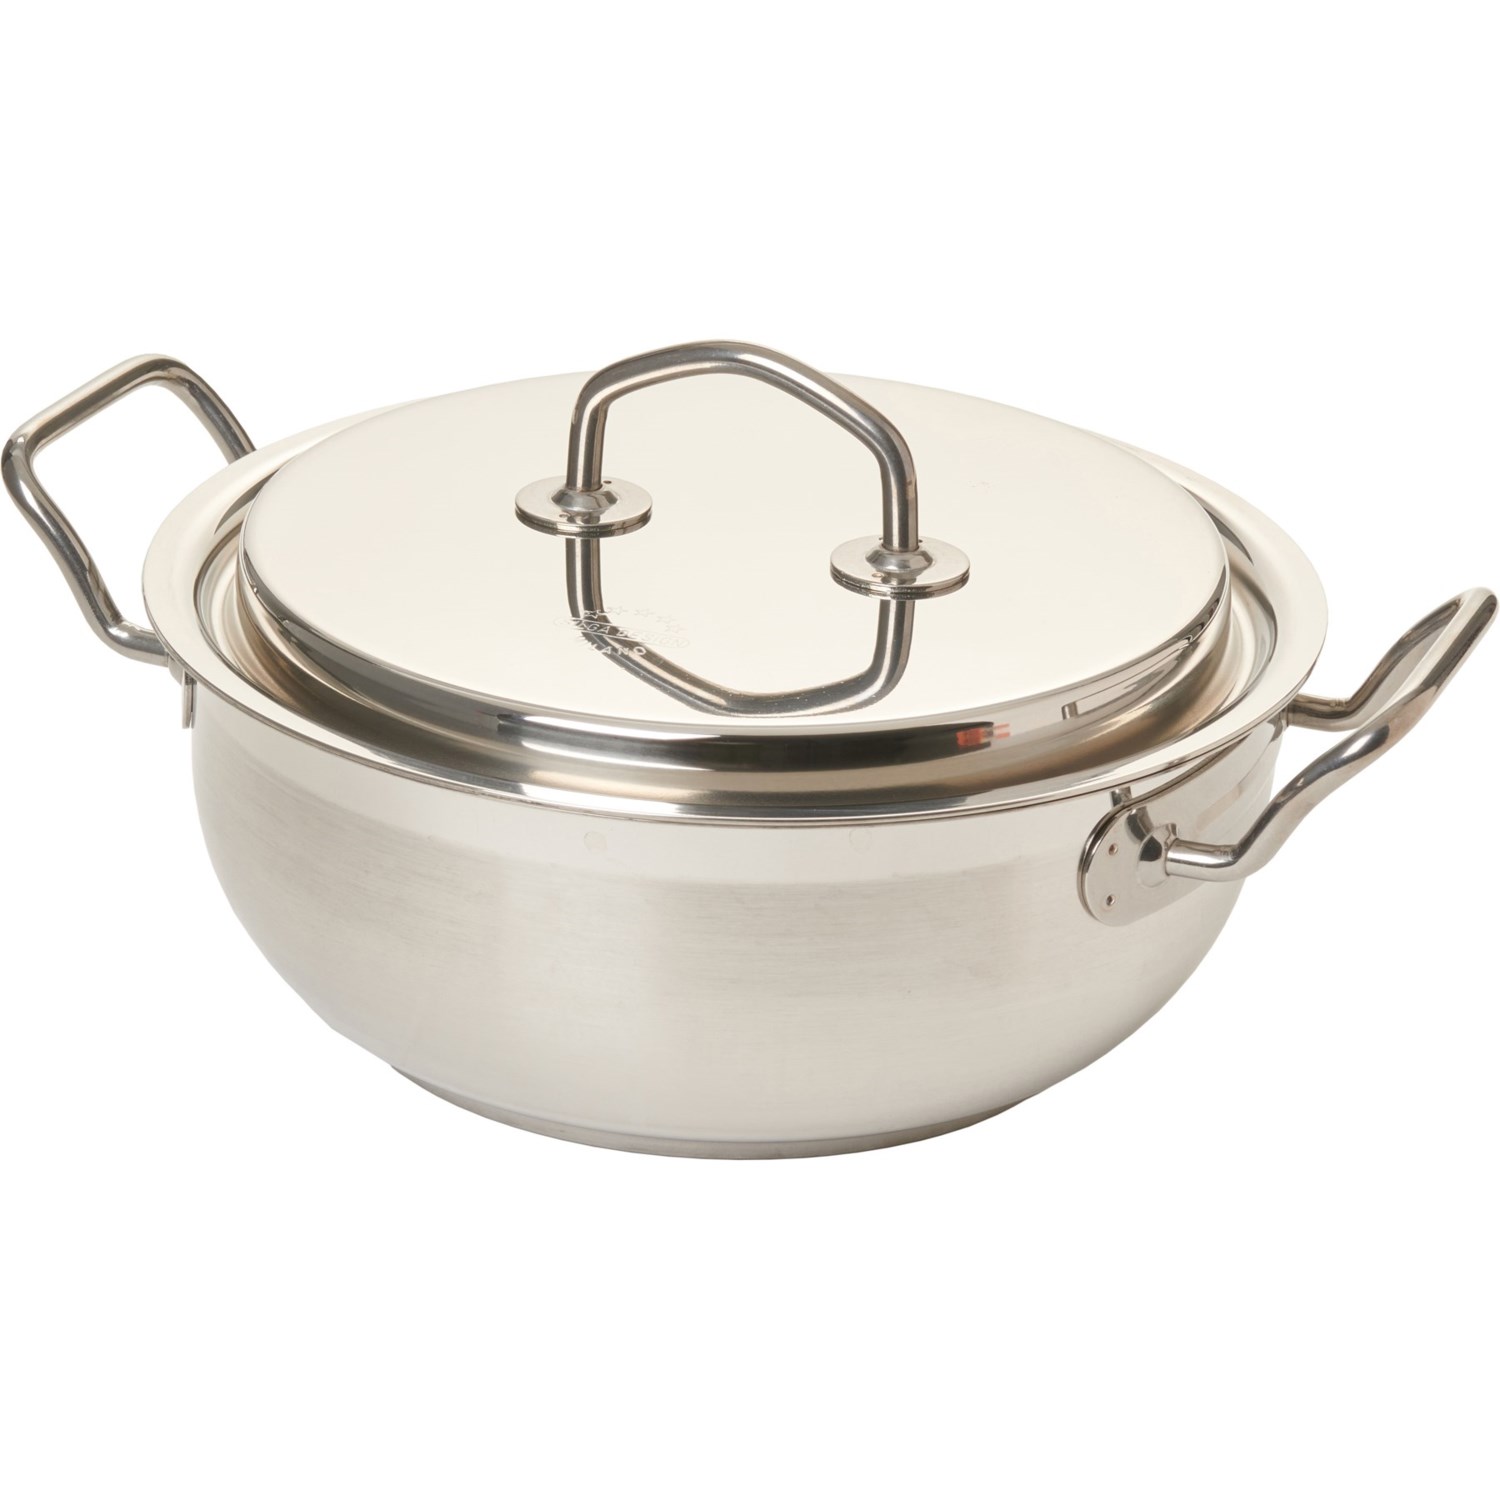 https://i.stpost.com/silga-made-in-italy-teknika-casserole-pan-with-lid-45-qt-in-silver~p~2xnxu_02~1500.2.jpg